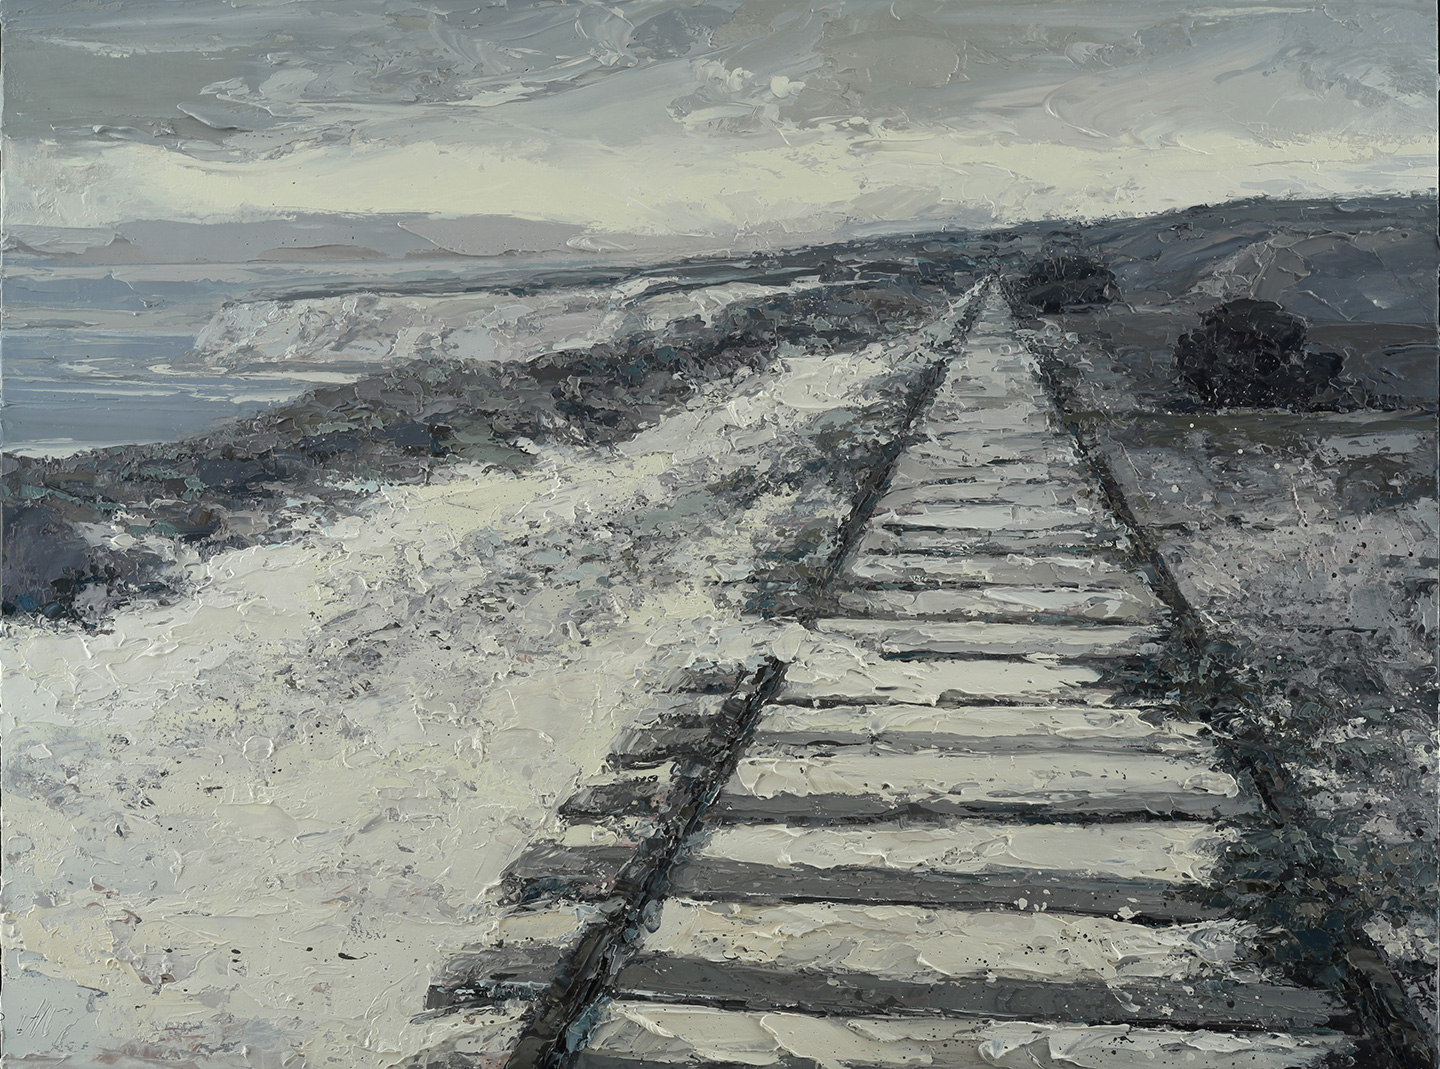 Meyer Sand on the Tracks